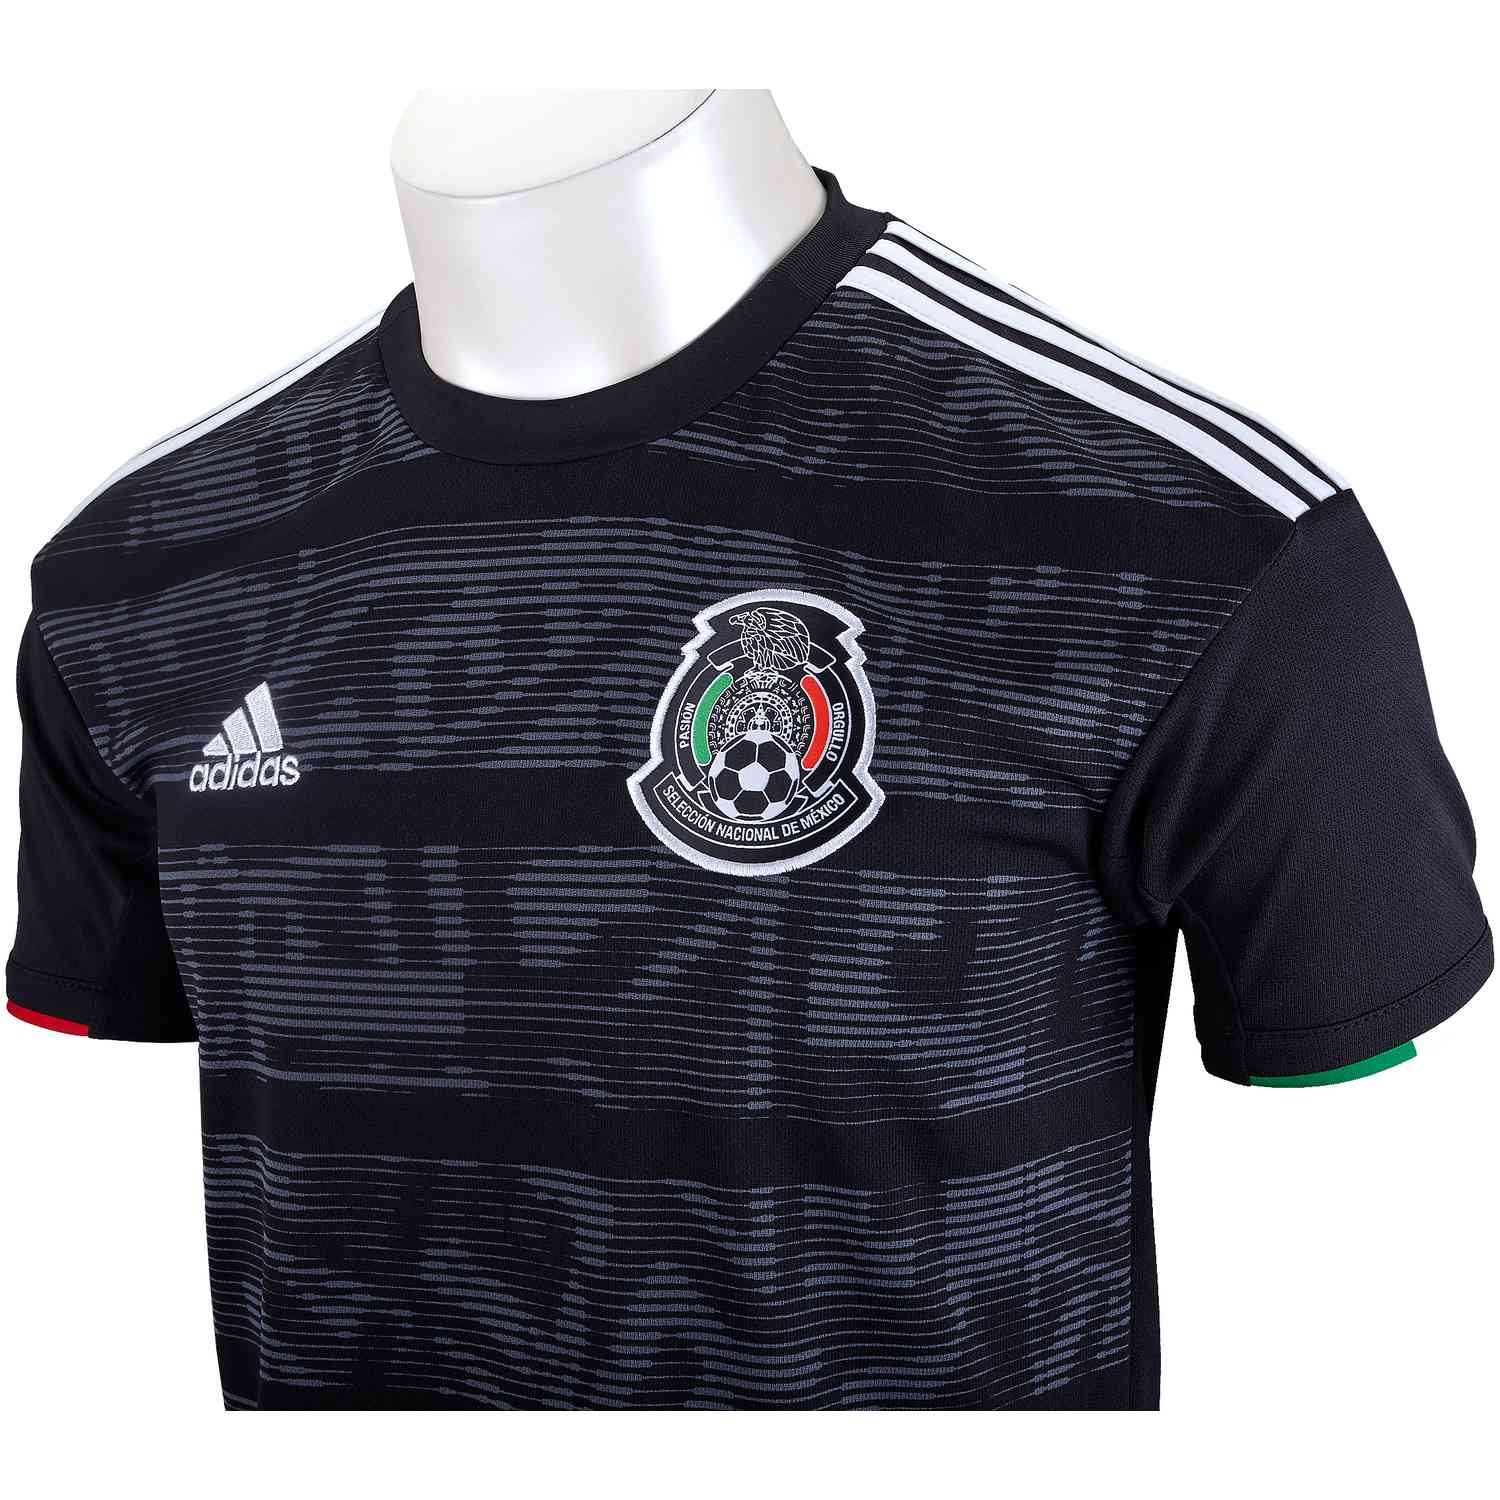 adidas jersey mexico 2019